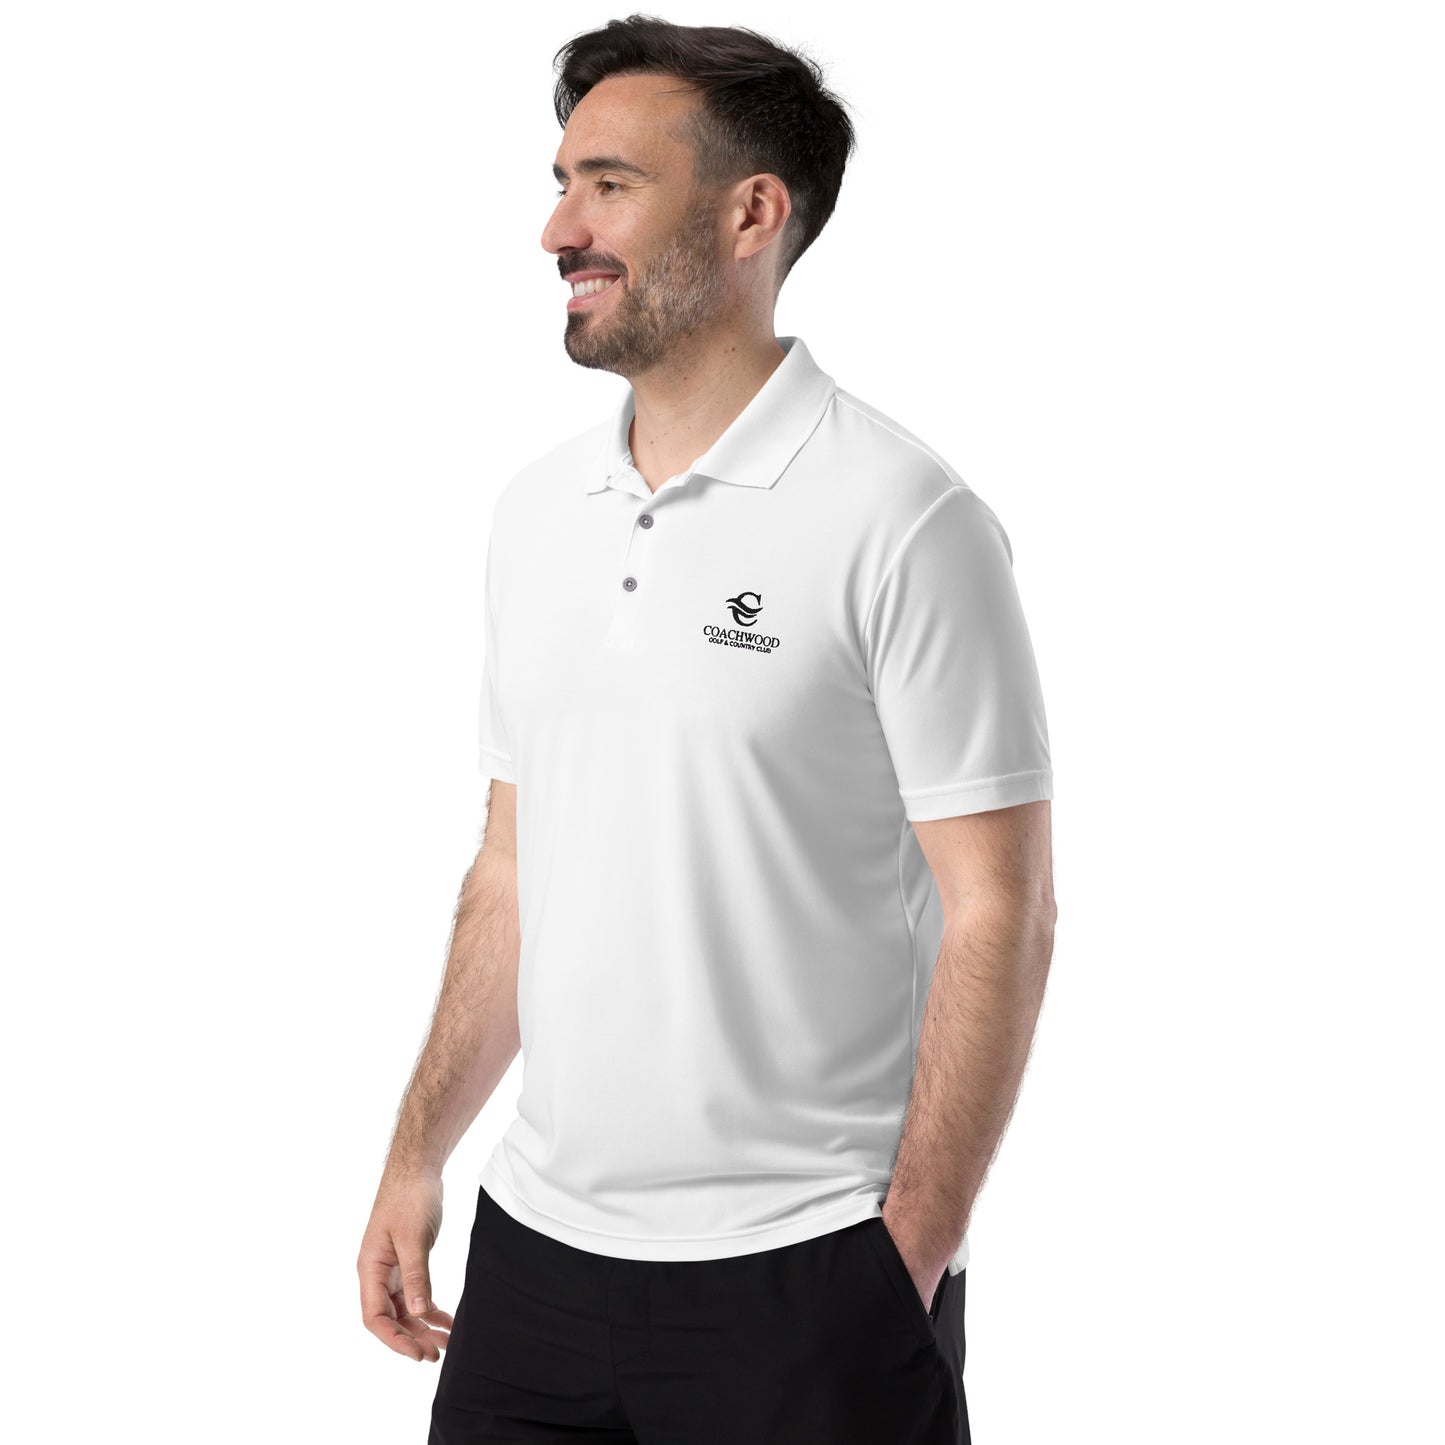 Coachwood Golf & Country Club X Adidas: Performance Polo Shirt